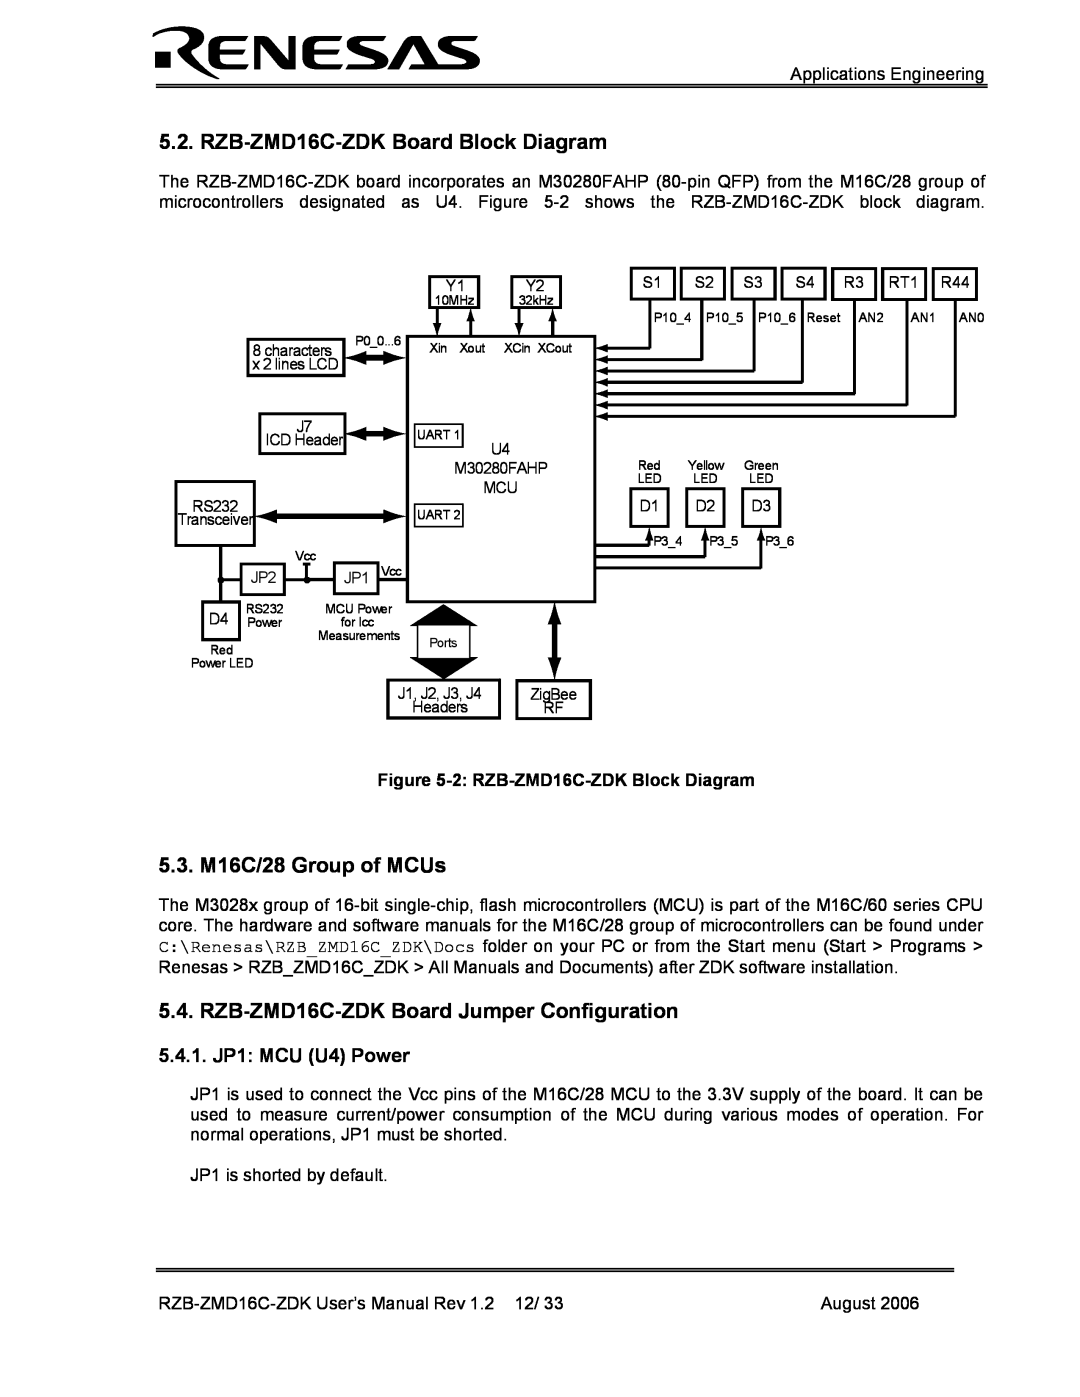 Renesas RZB-ZMD16C-ZDKBoard Block Diagram, 5.3. M16C/28 Group of MCUs, RZB-ZMD16C-ZDKBoard Jumper Configuration 